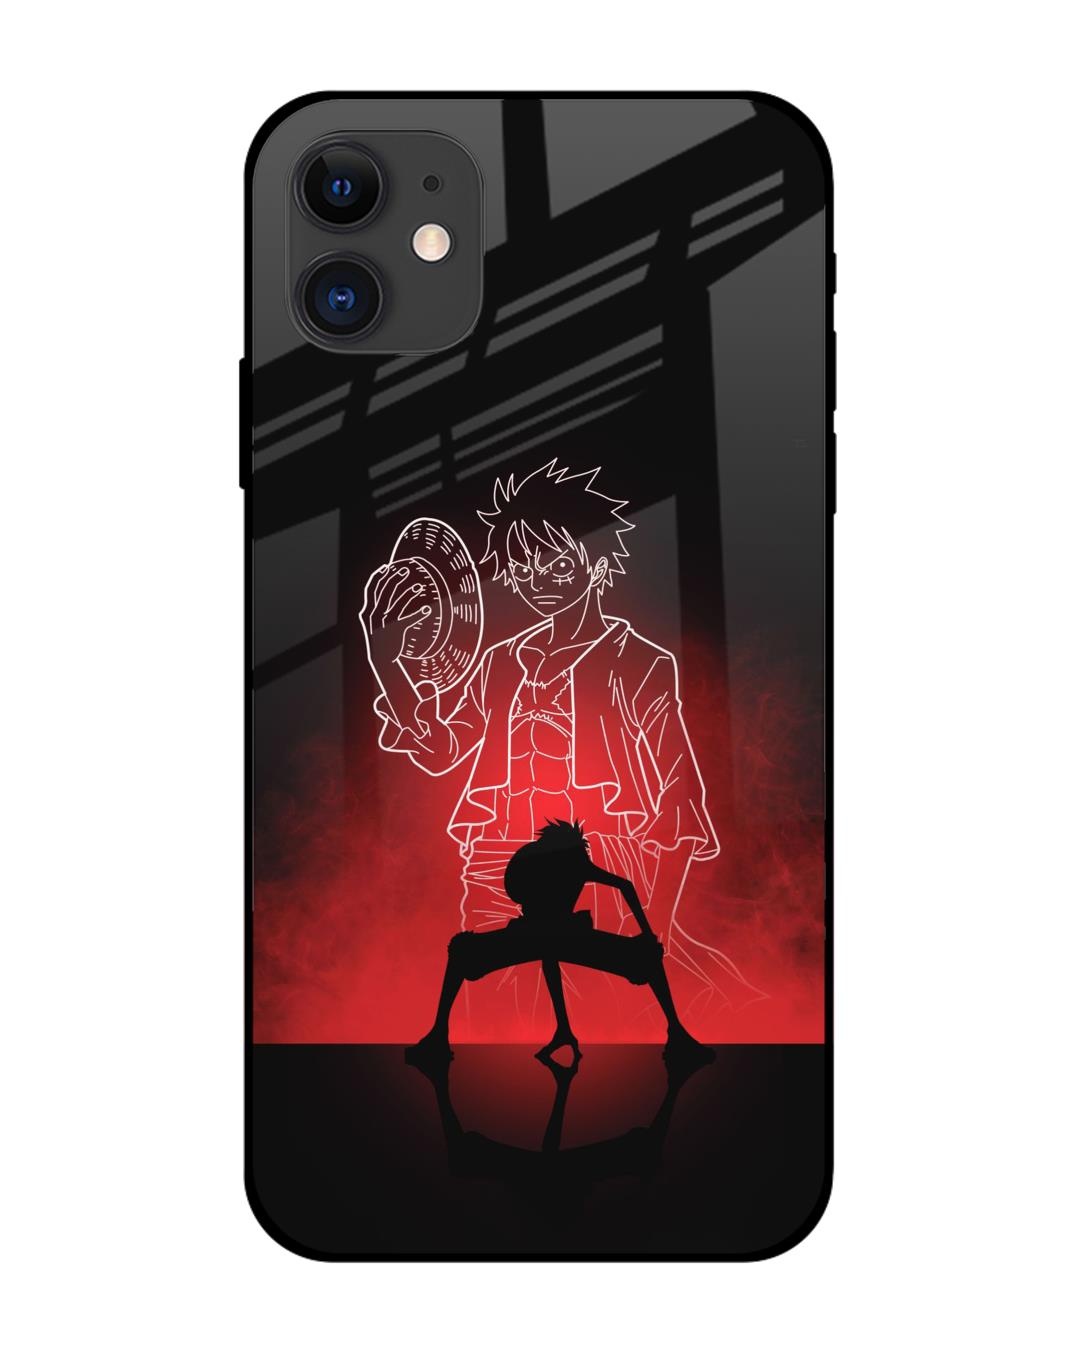 Phone 14 Pro Max Cases Full Body Anime  Demon Slayer Iphone 12 Pro Max Case   Anime  Aliexpress